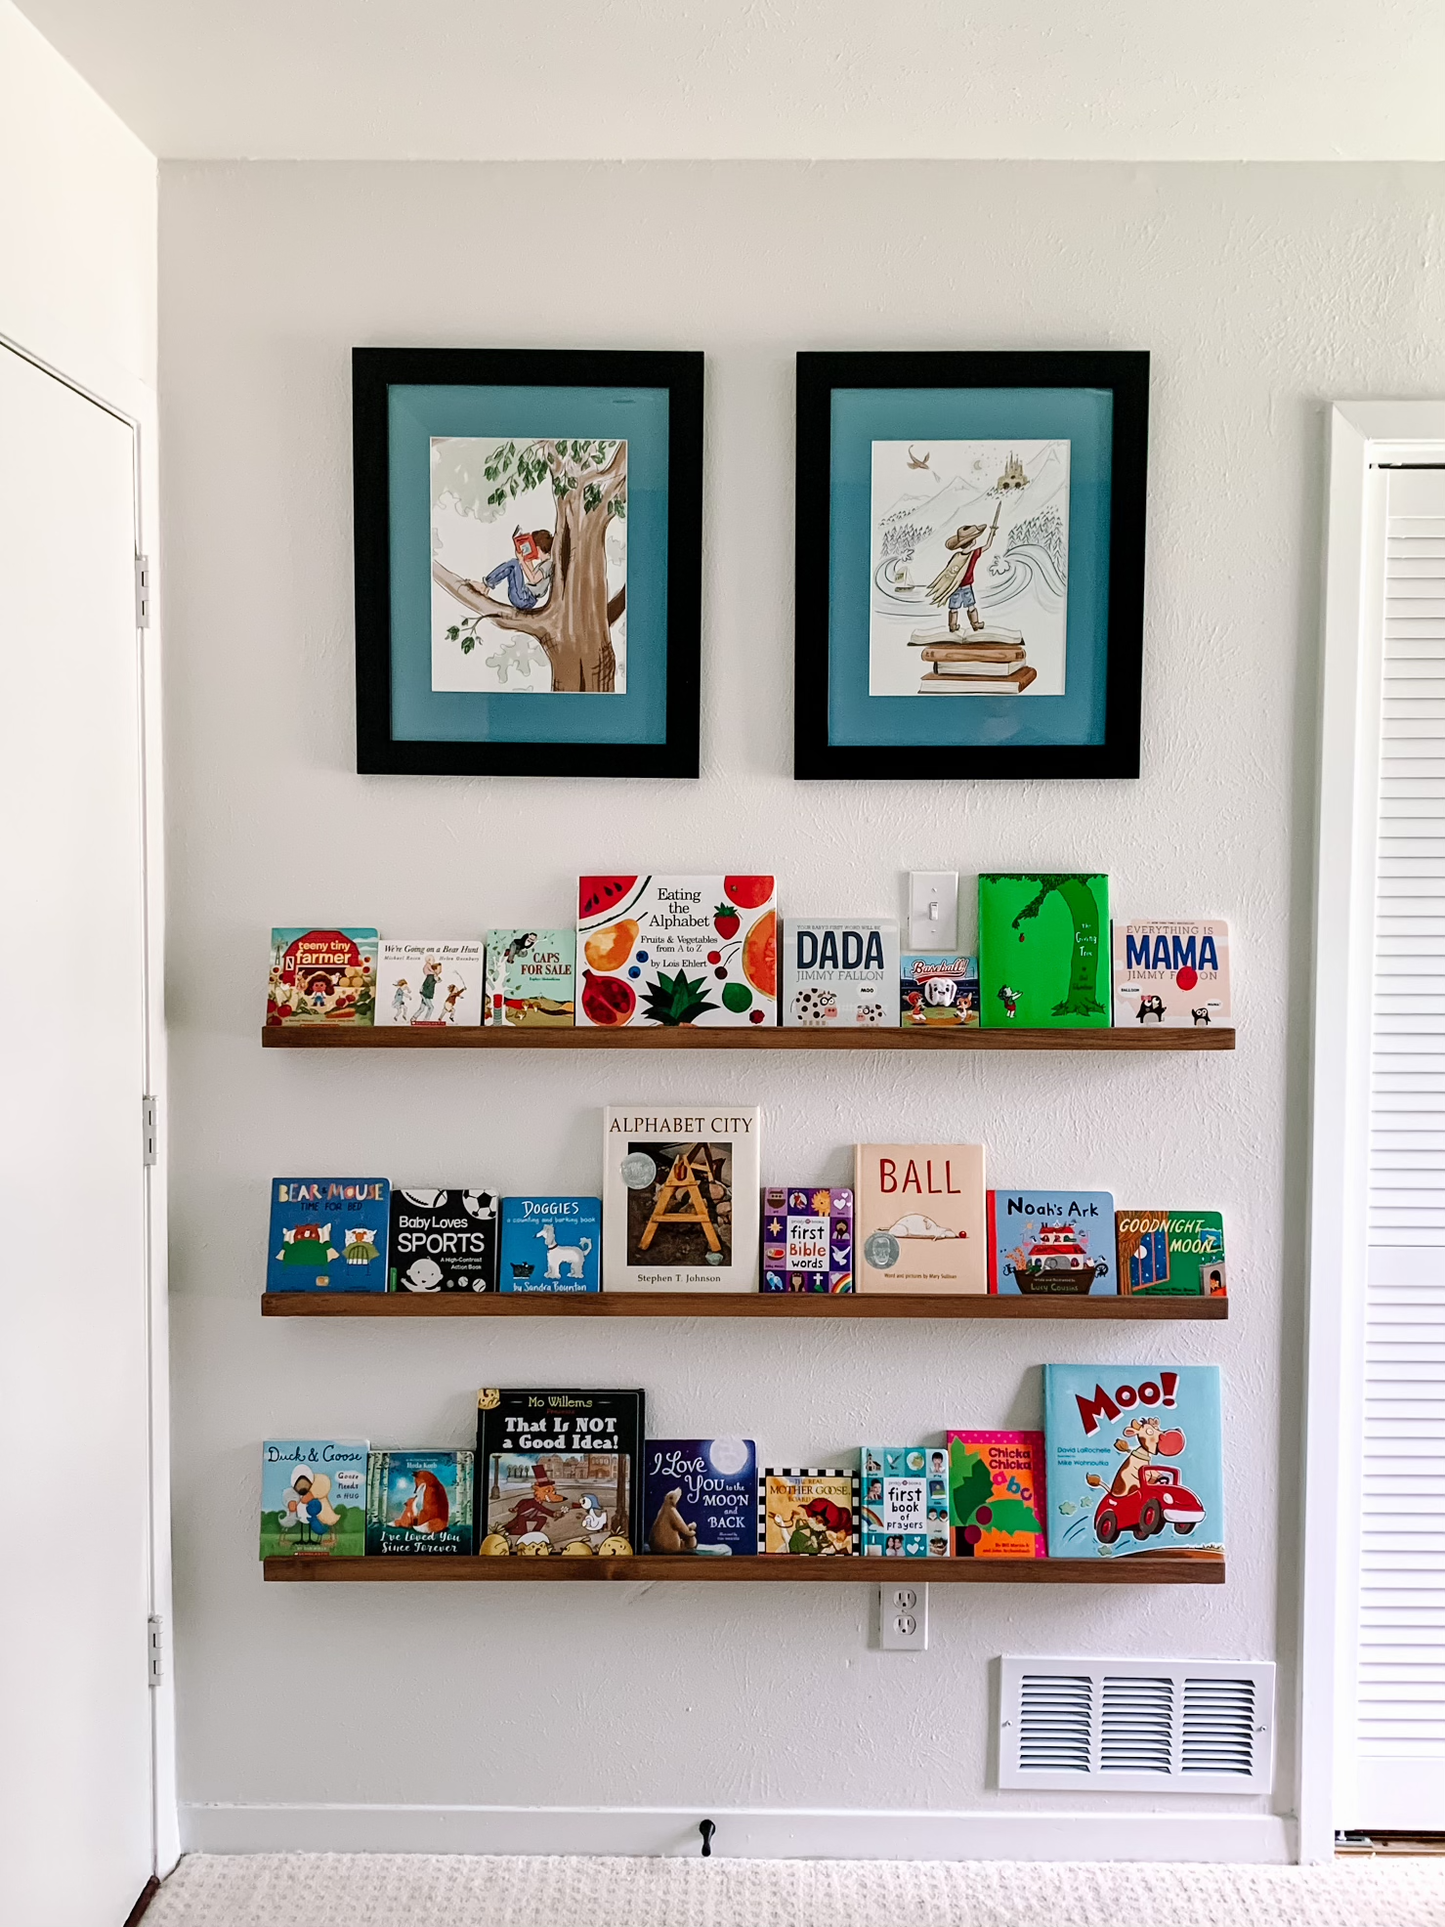 Pine Nursery Photo & Book Shelf